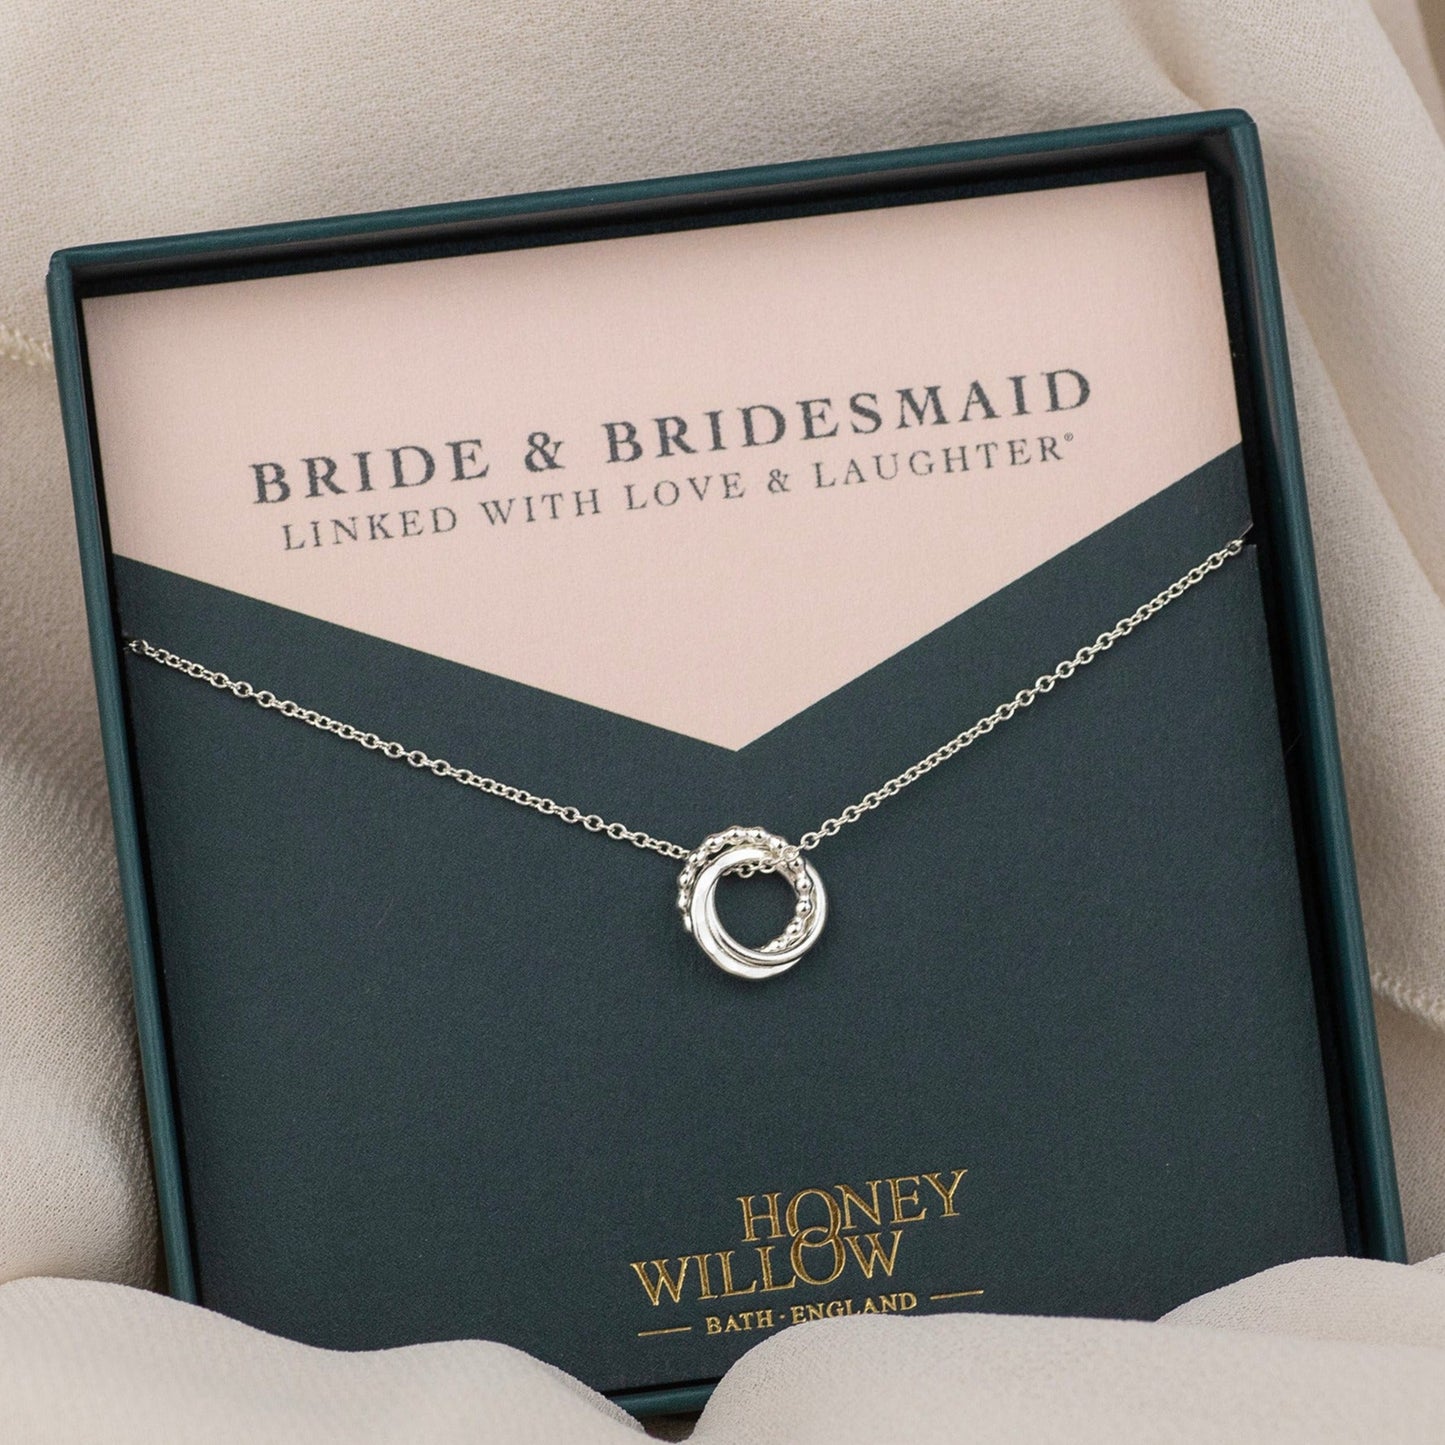 Bride & Bridesmaids Necklace - Silver Love Knot Necklace